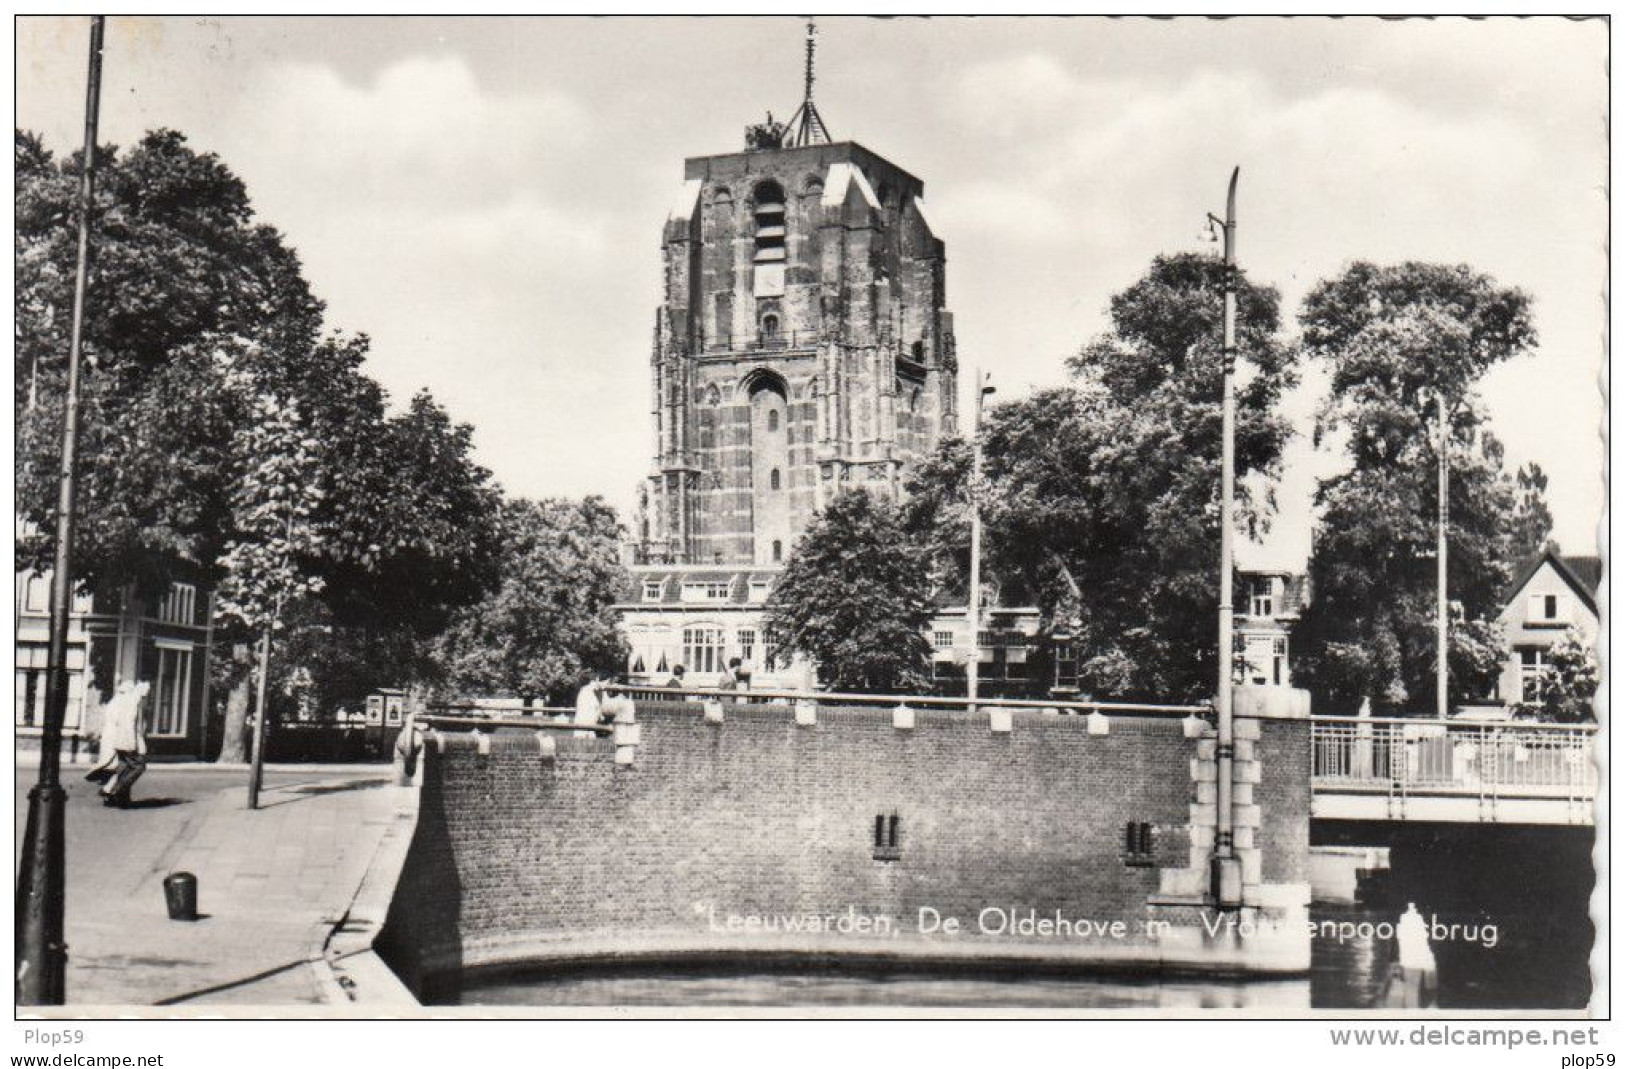 Cpa Ak Pk Leeuwarden De Oldehove M Vrouwenpoortbrug Real Photo 1962 - Leeuwarden